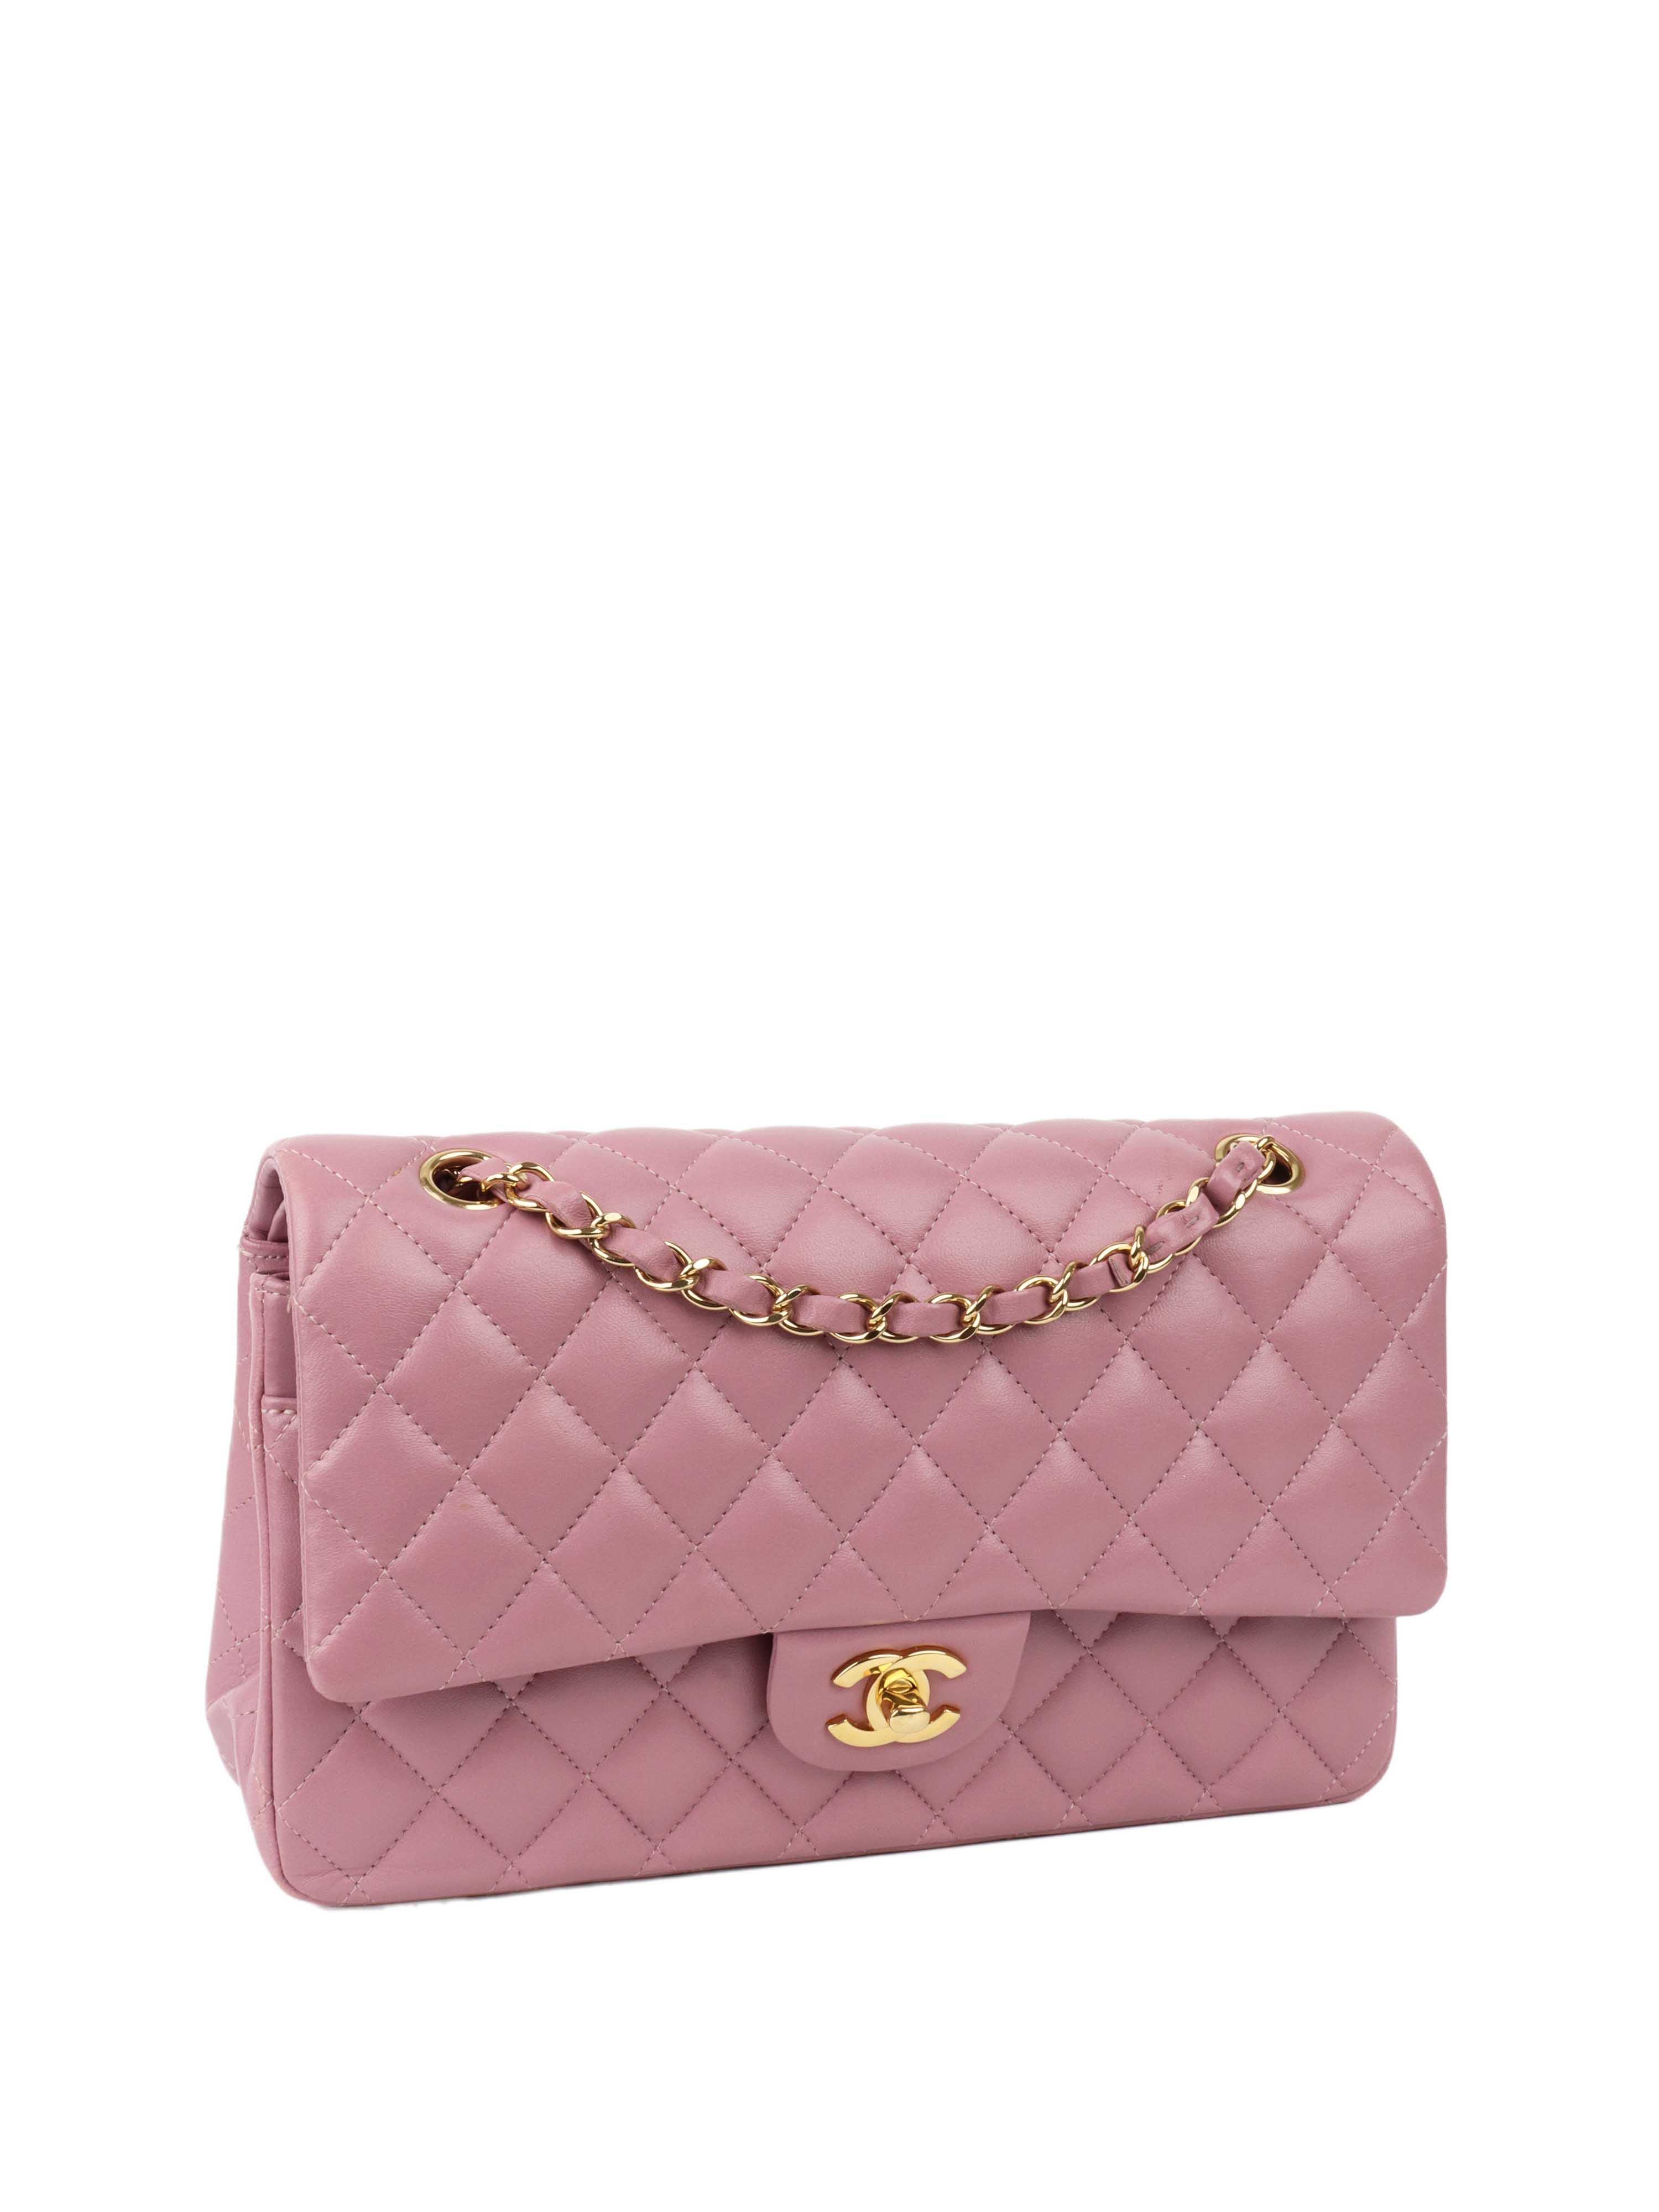 Chanel Light Purple Lambskin Medium Classic Flap Bag.